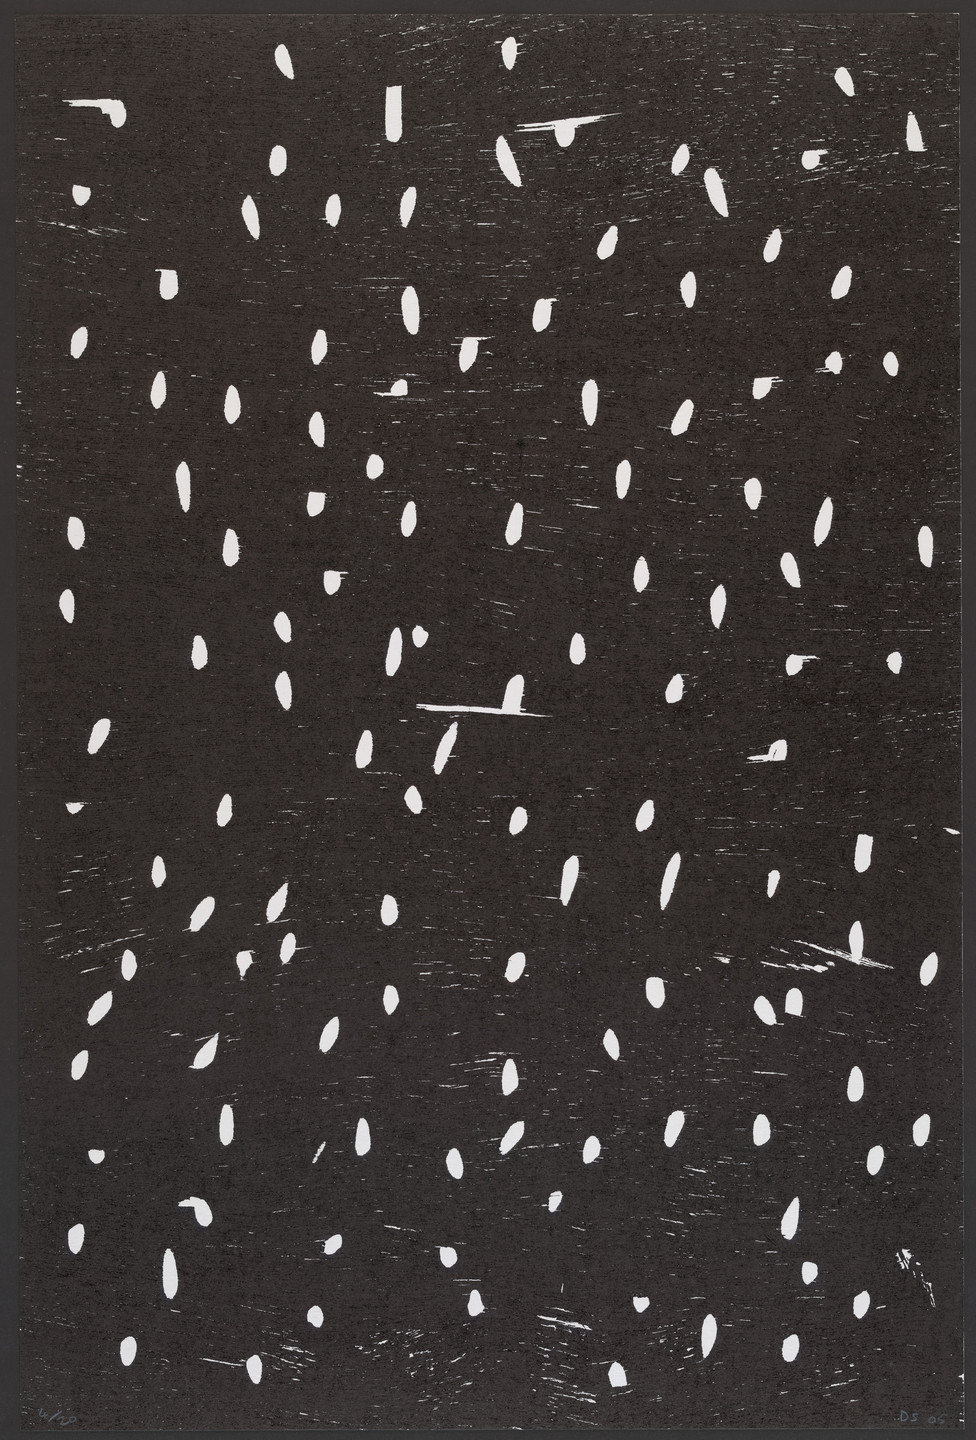 David Shrigley Untitled (Dots) from an untitled portfolio 2005